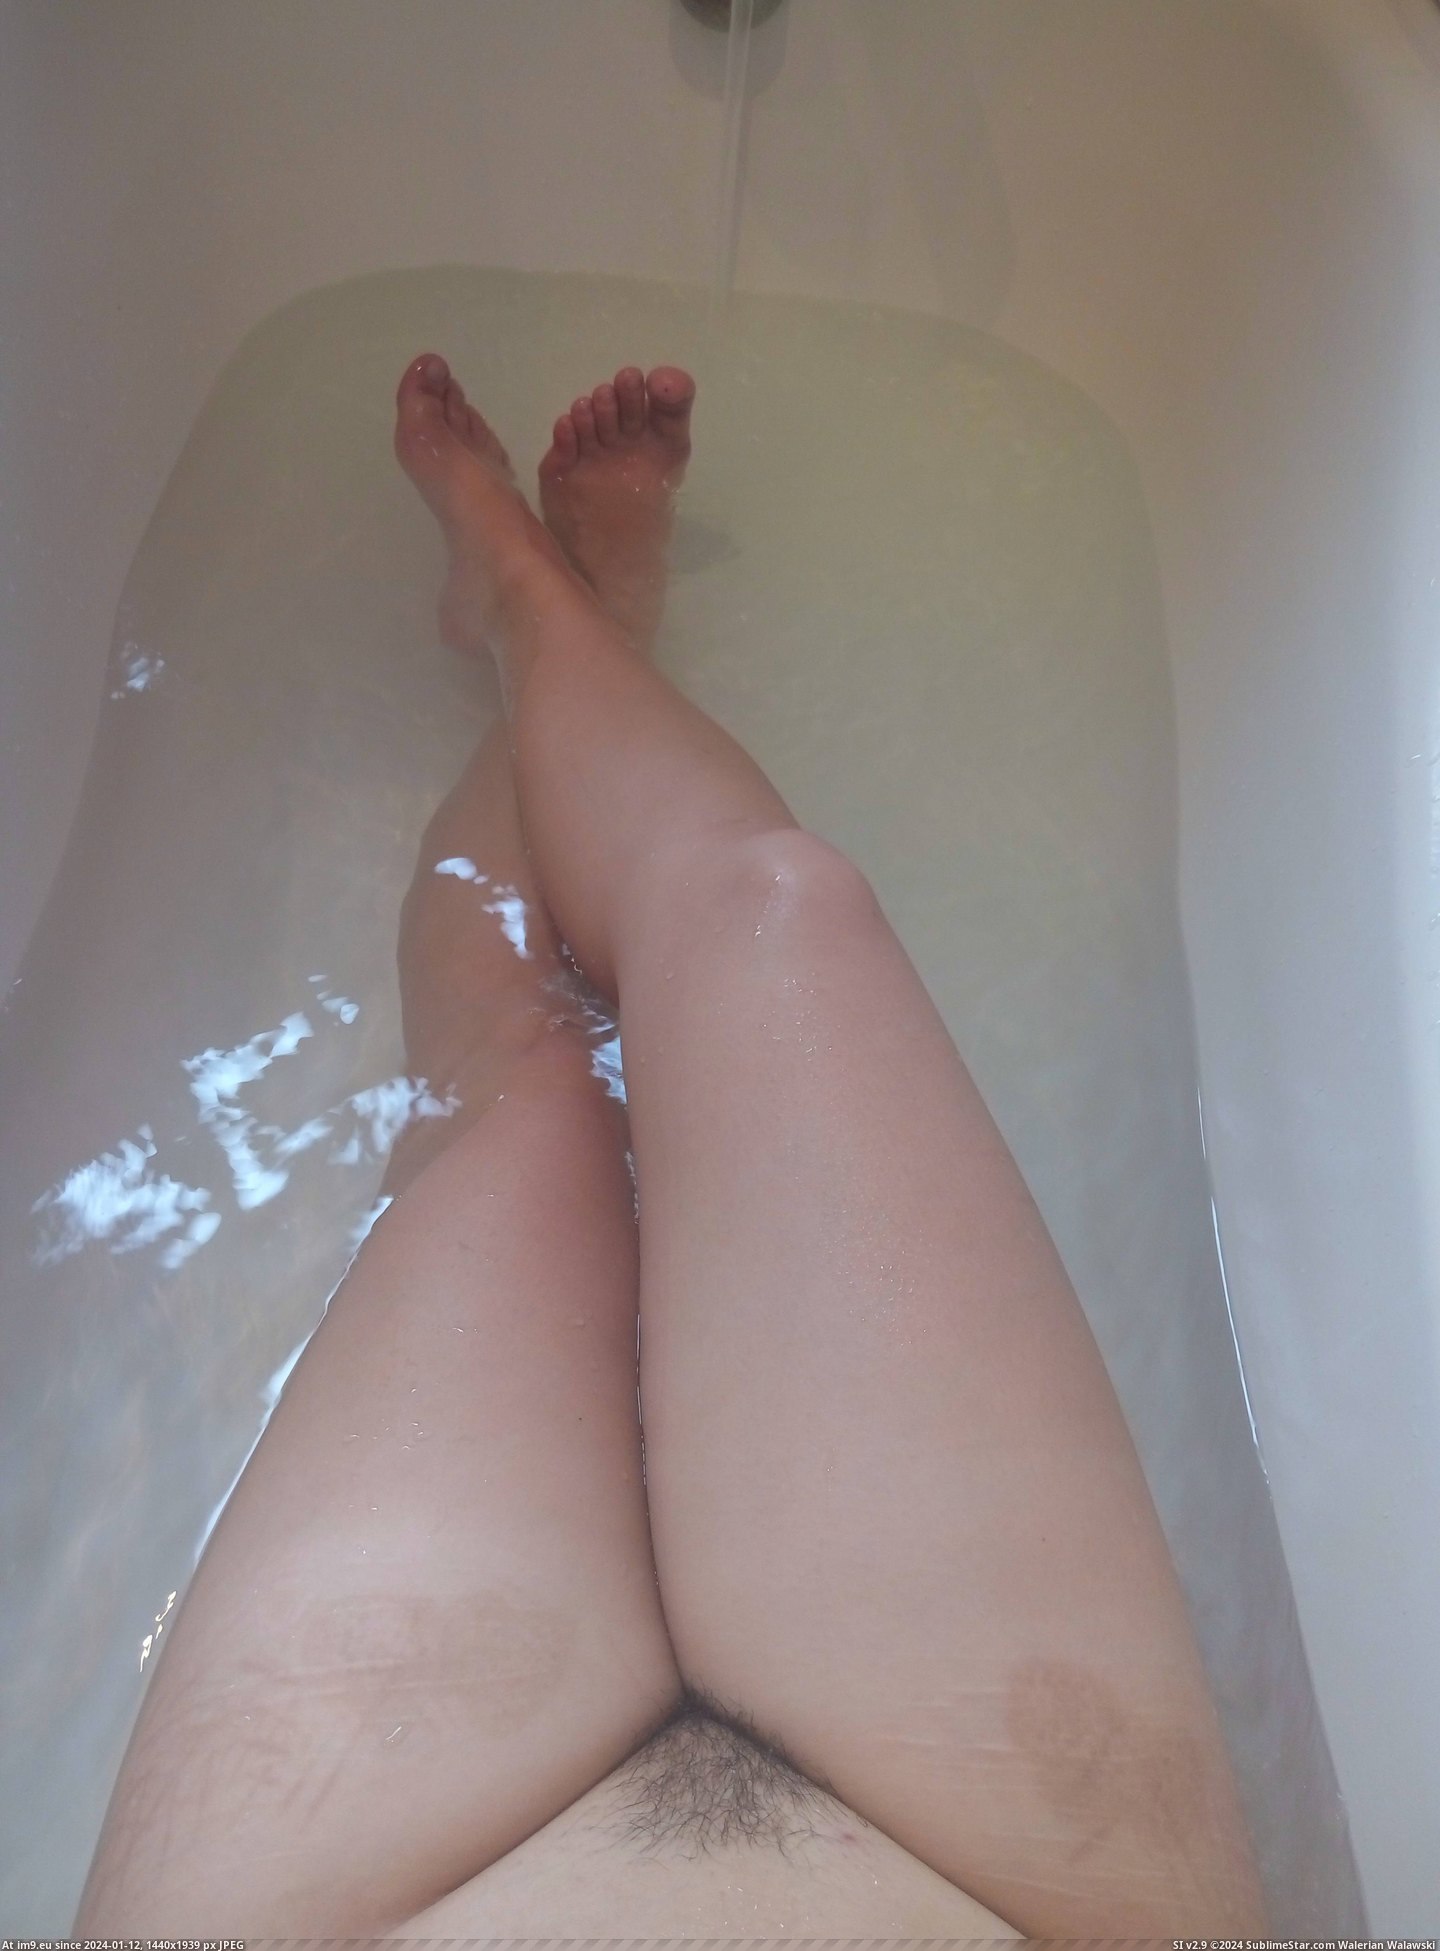 #Nsfw #Legs #Silky #Bath #Soft [Nsfw] My legs are especially soft and silky after a bath Pic. (Obraz z album My r/NSFW favs))